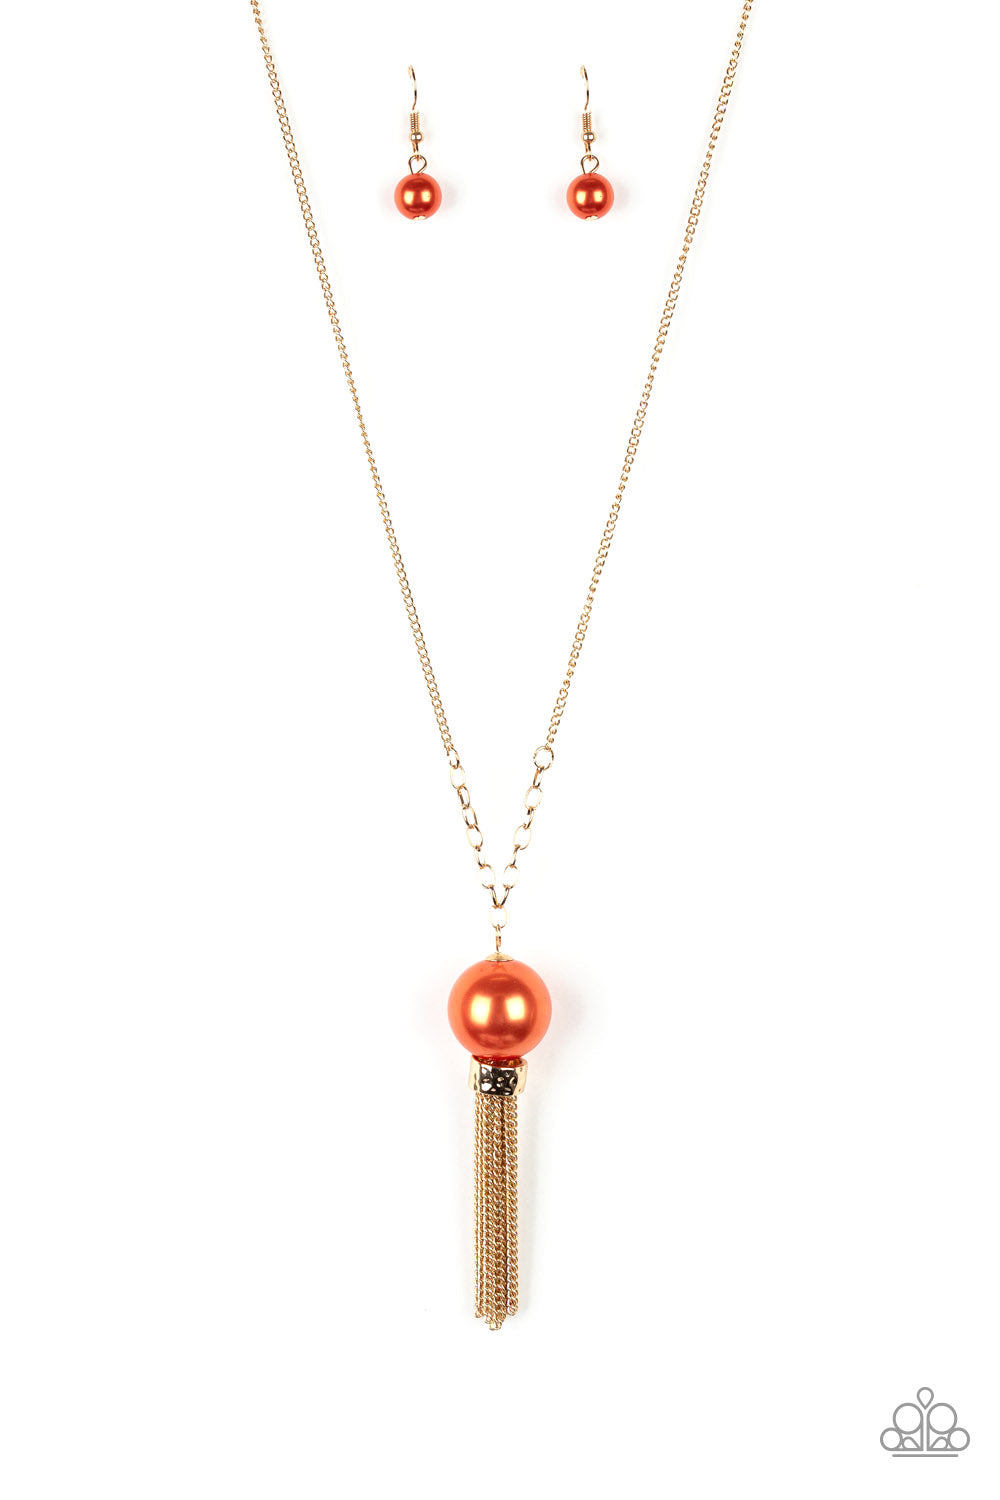 Paparazzi - Belle of the BALLROOM - Orange Pearl Gold Tassel Necklace - Alies Bling Bar